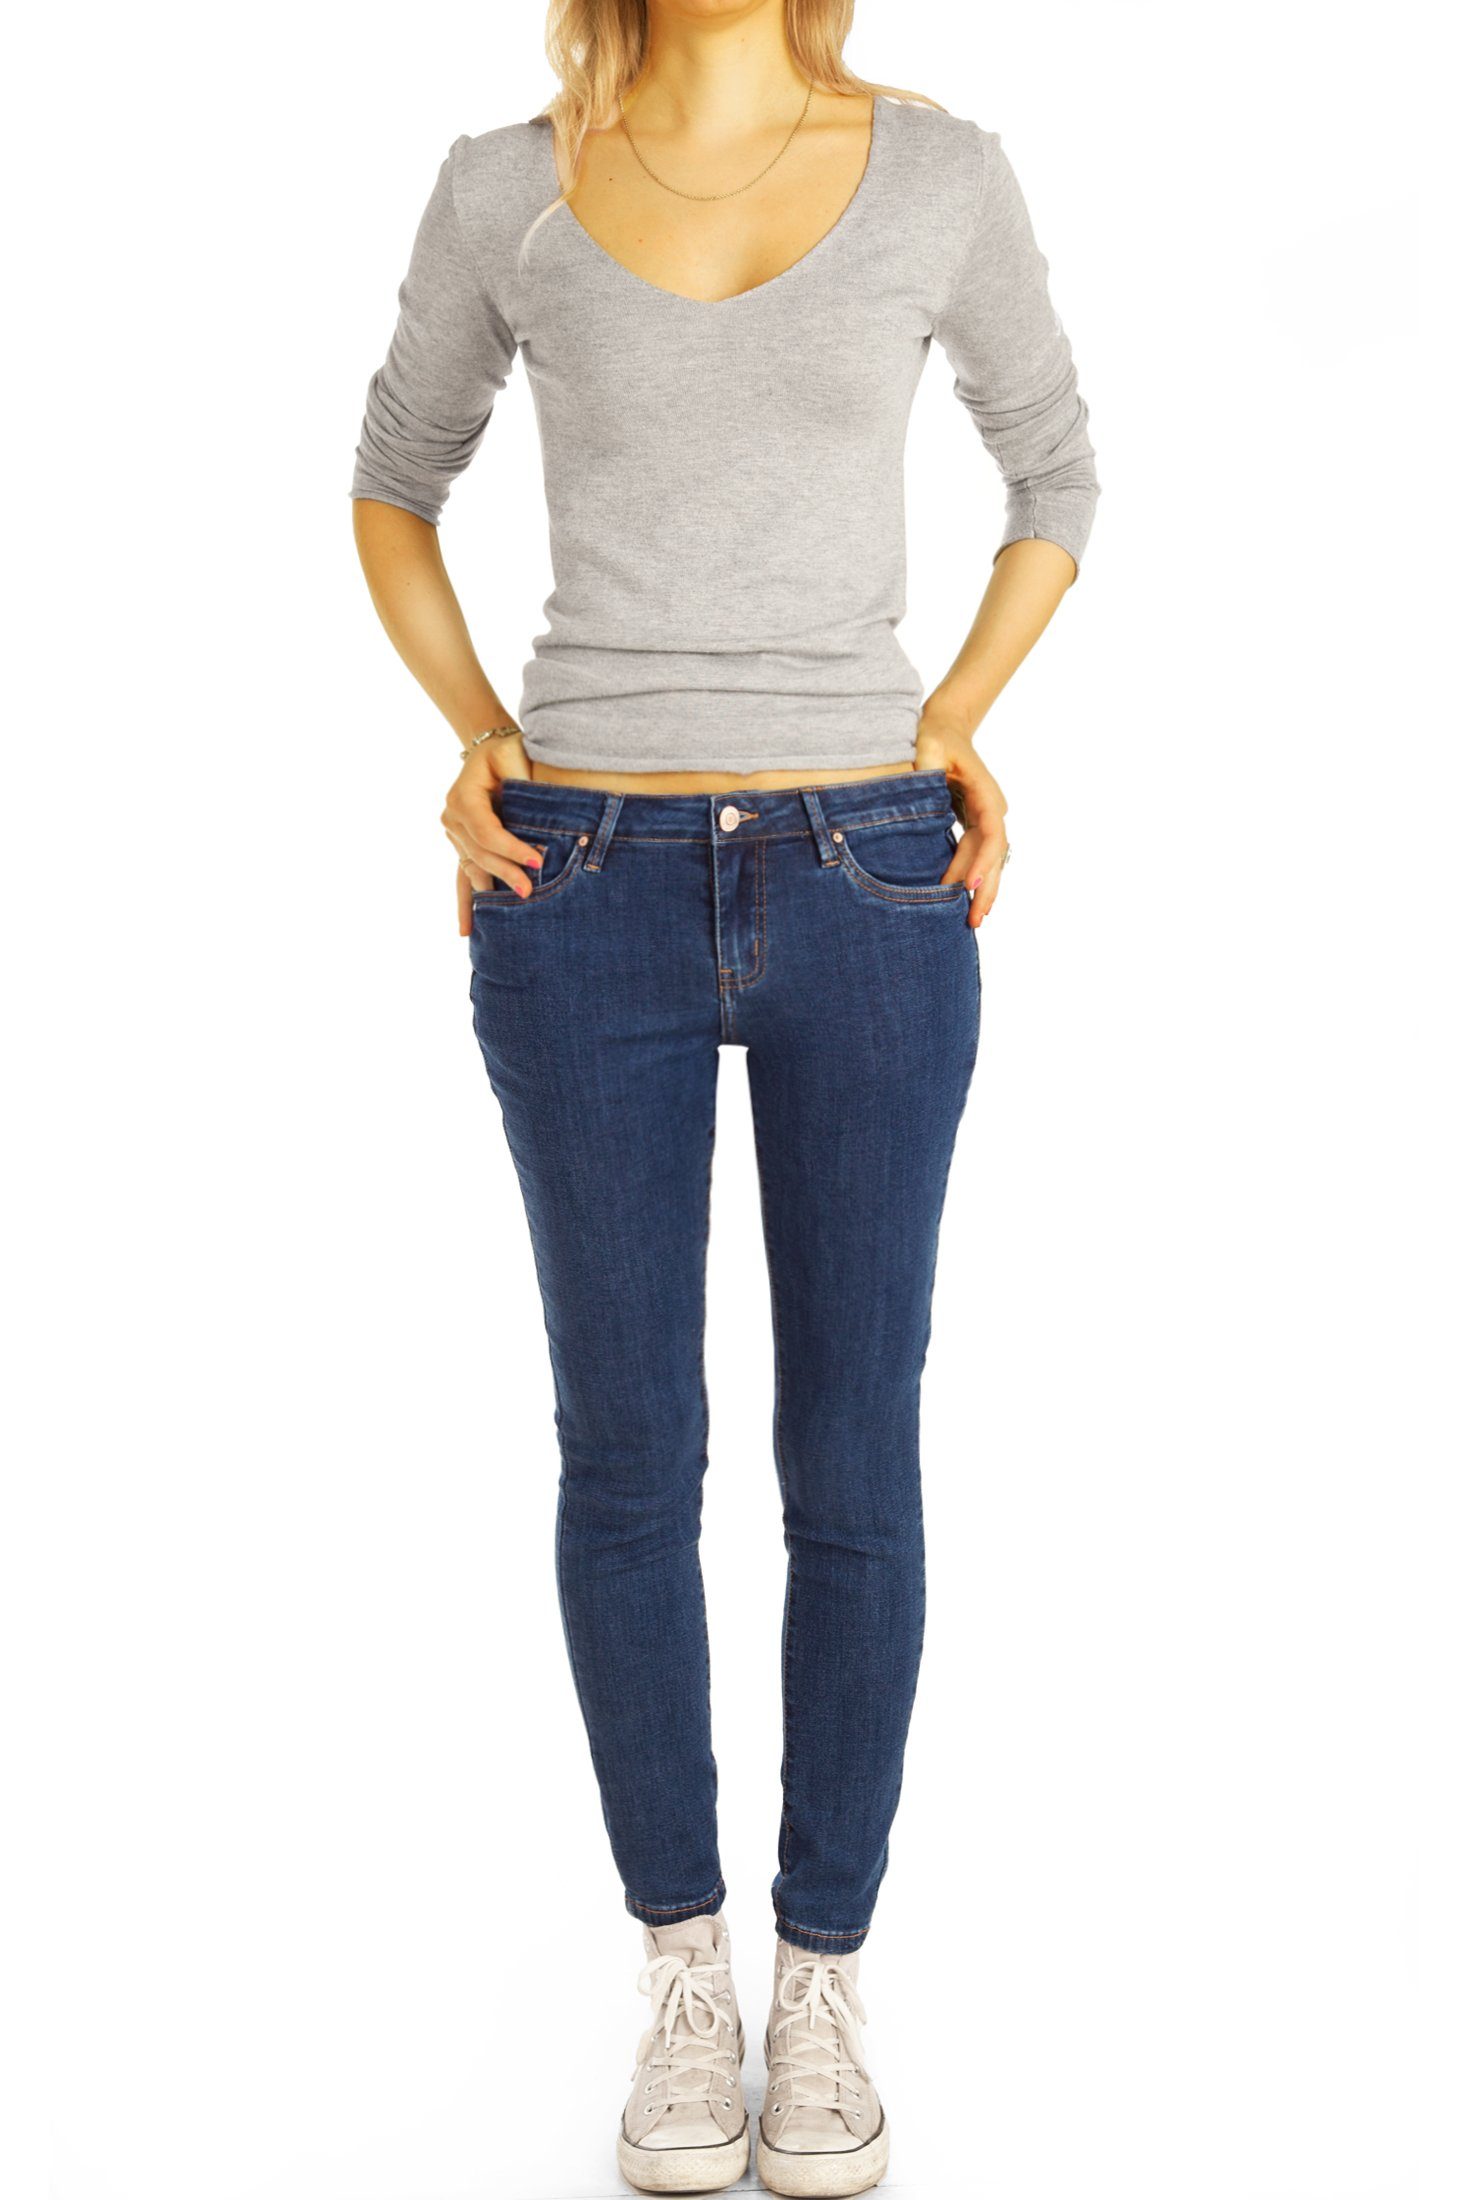 be styled Low-rise-Jeans Hüftjeans Skinny - Stretch-Anteil, - Stretch Hose dunkelblau slim 5-Pocket-Style Röhrenjeans Damen- j27p-1 mit